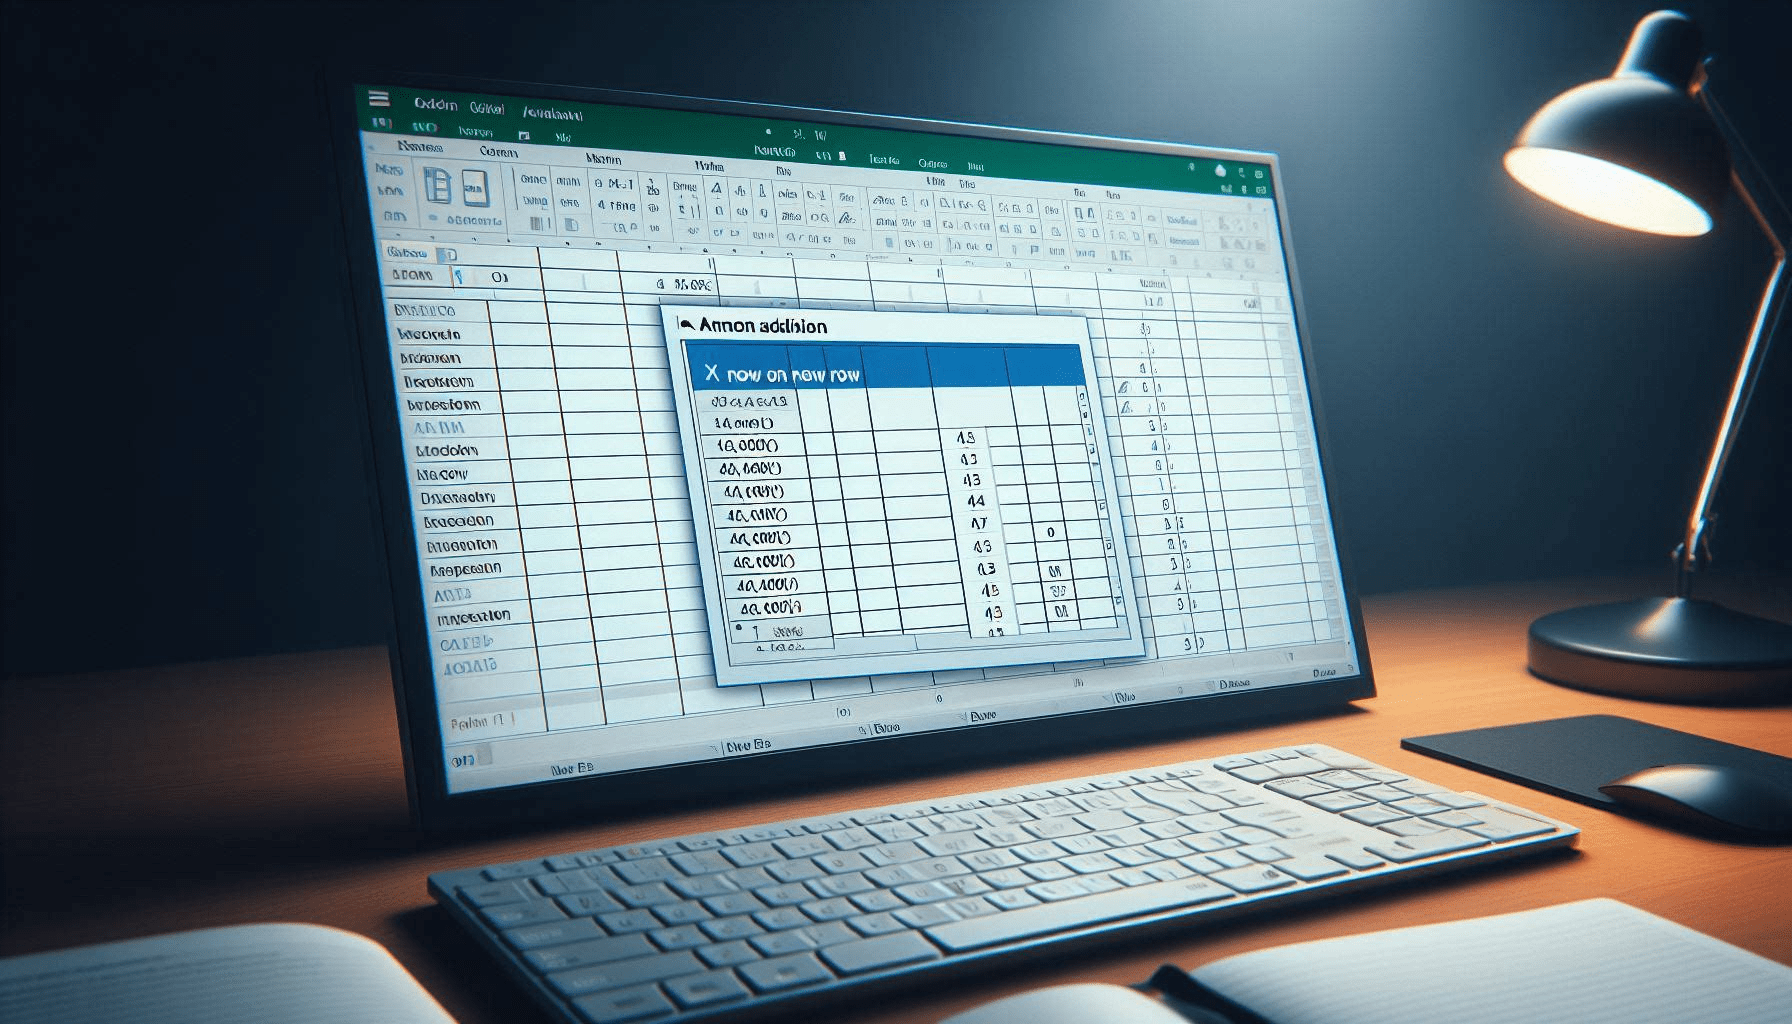 Excel Basics